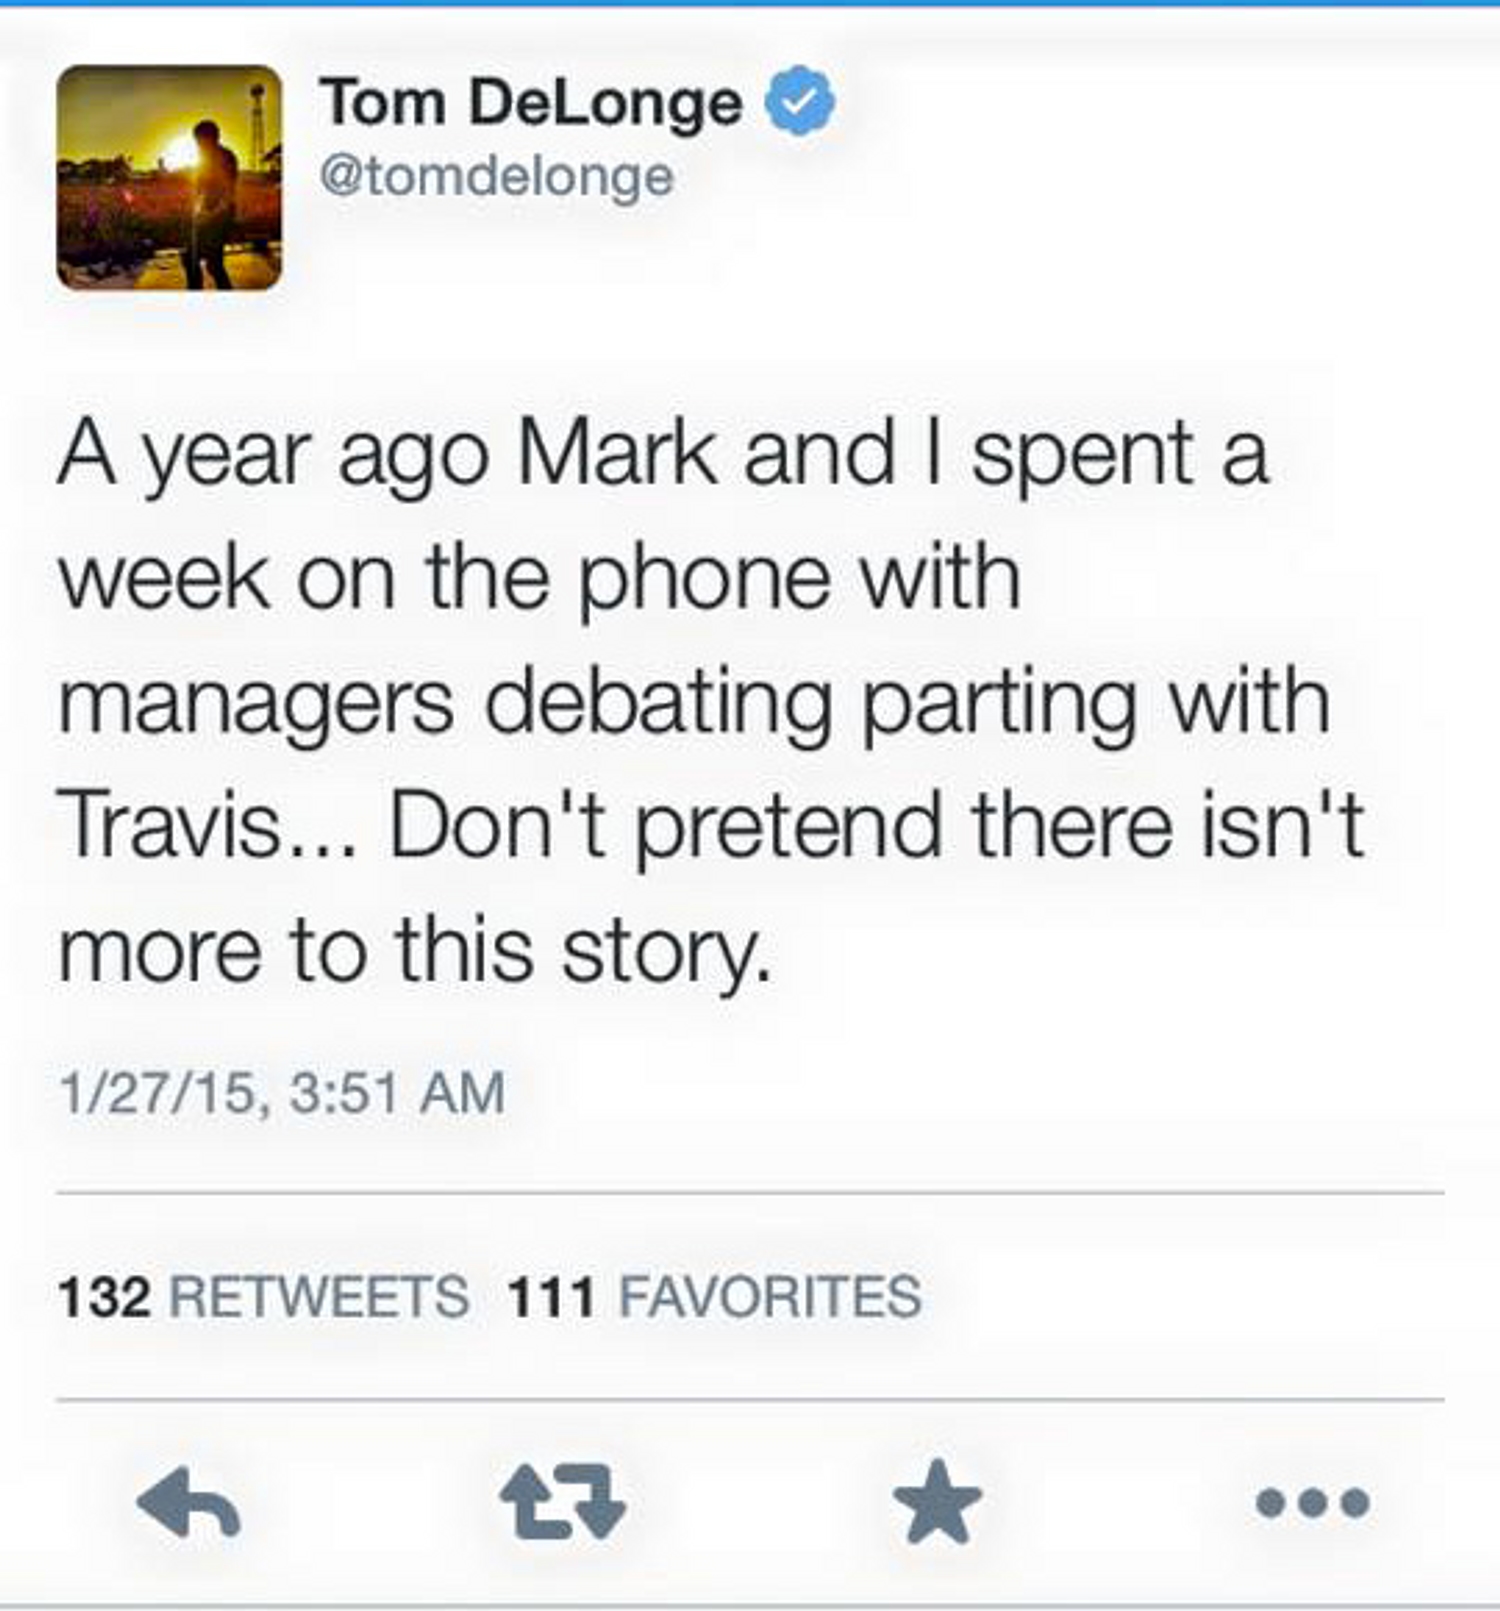 Tom DeLonge is out of Blink-182, Mark Hoppus and Travis Barker confirm